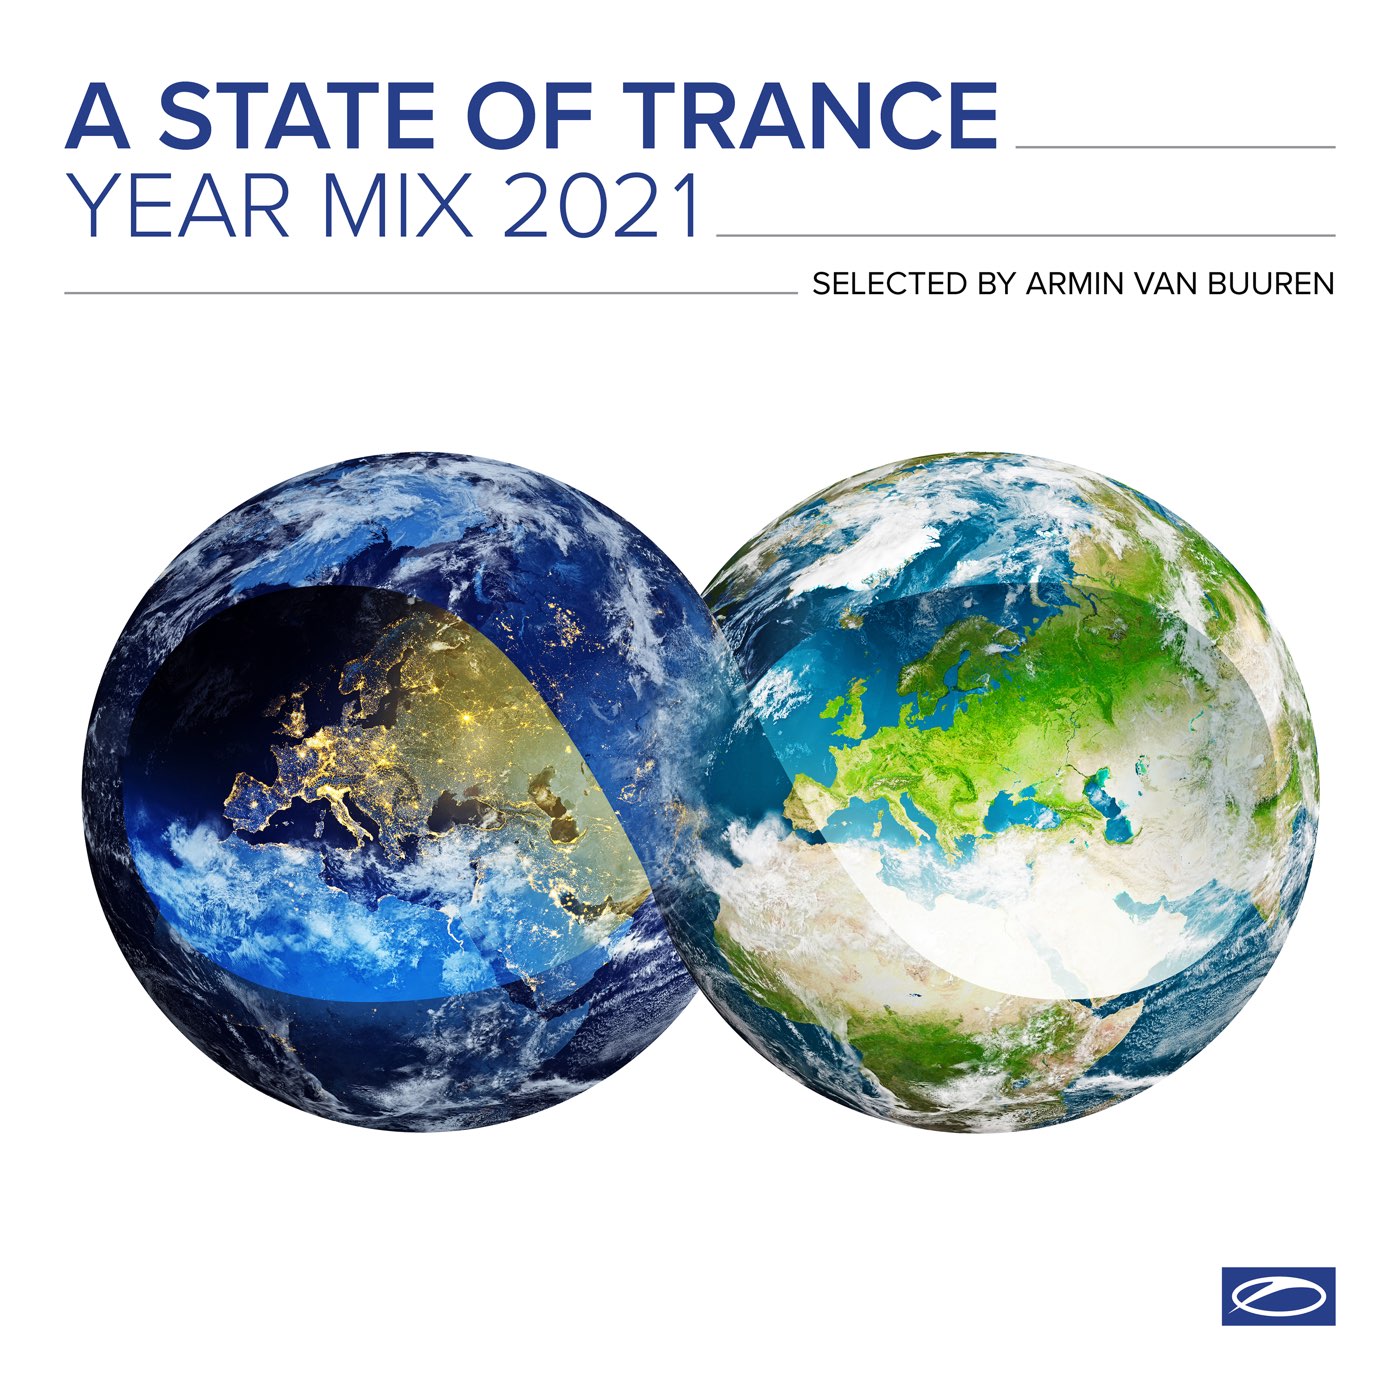 Armin van Buuren - A State of Trance Year Mix 2021 (Selected by Armin Van Buuren) (2021) [iTunes Plus AAC M4A]-新房子